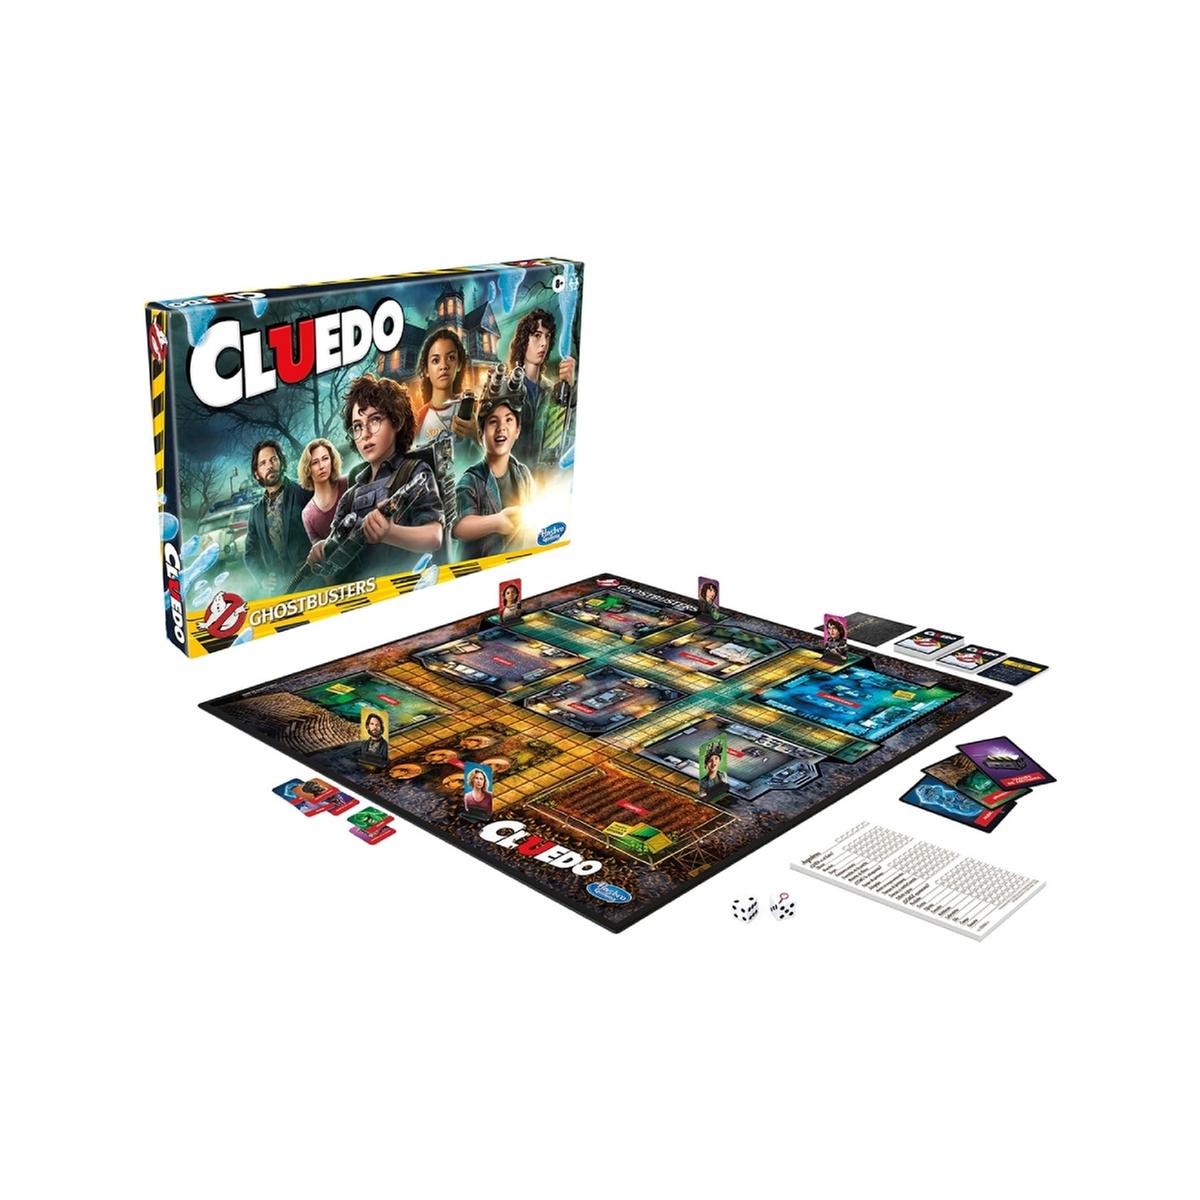 Cluedo - Ghostbusters | Juegos De Mesa | Toys"R"Us España